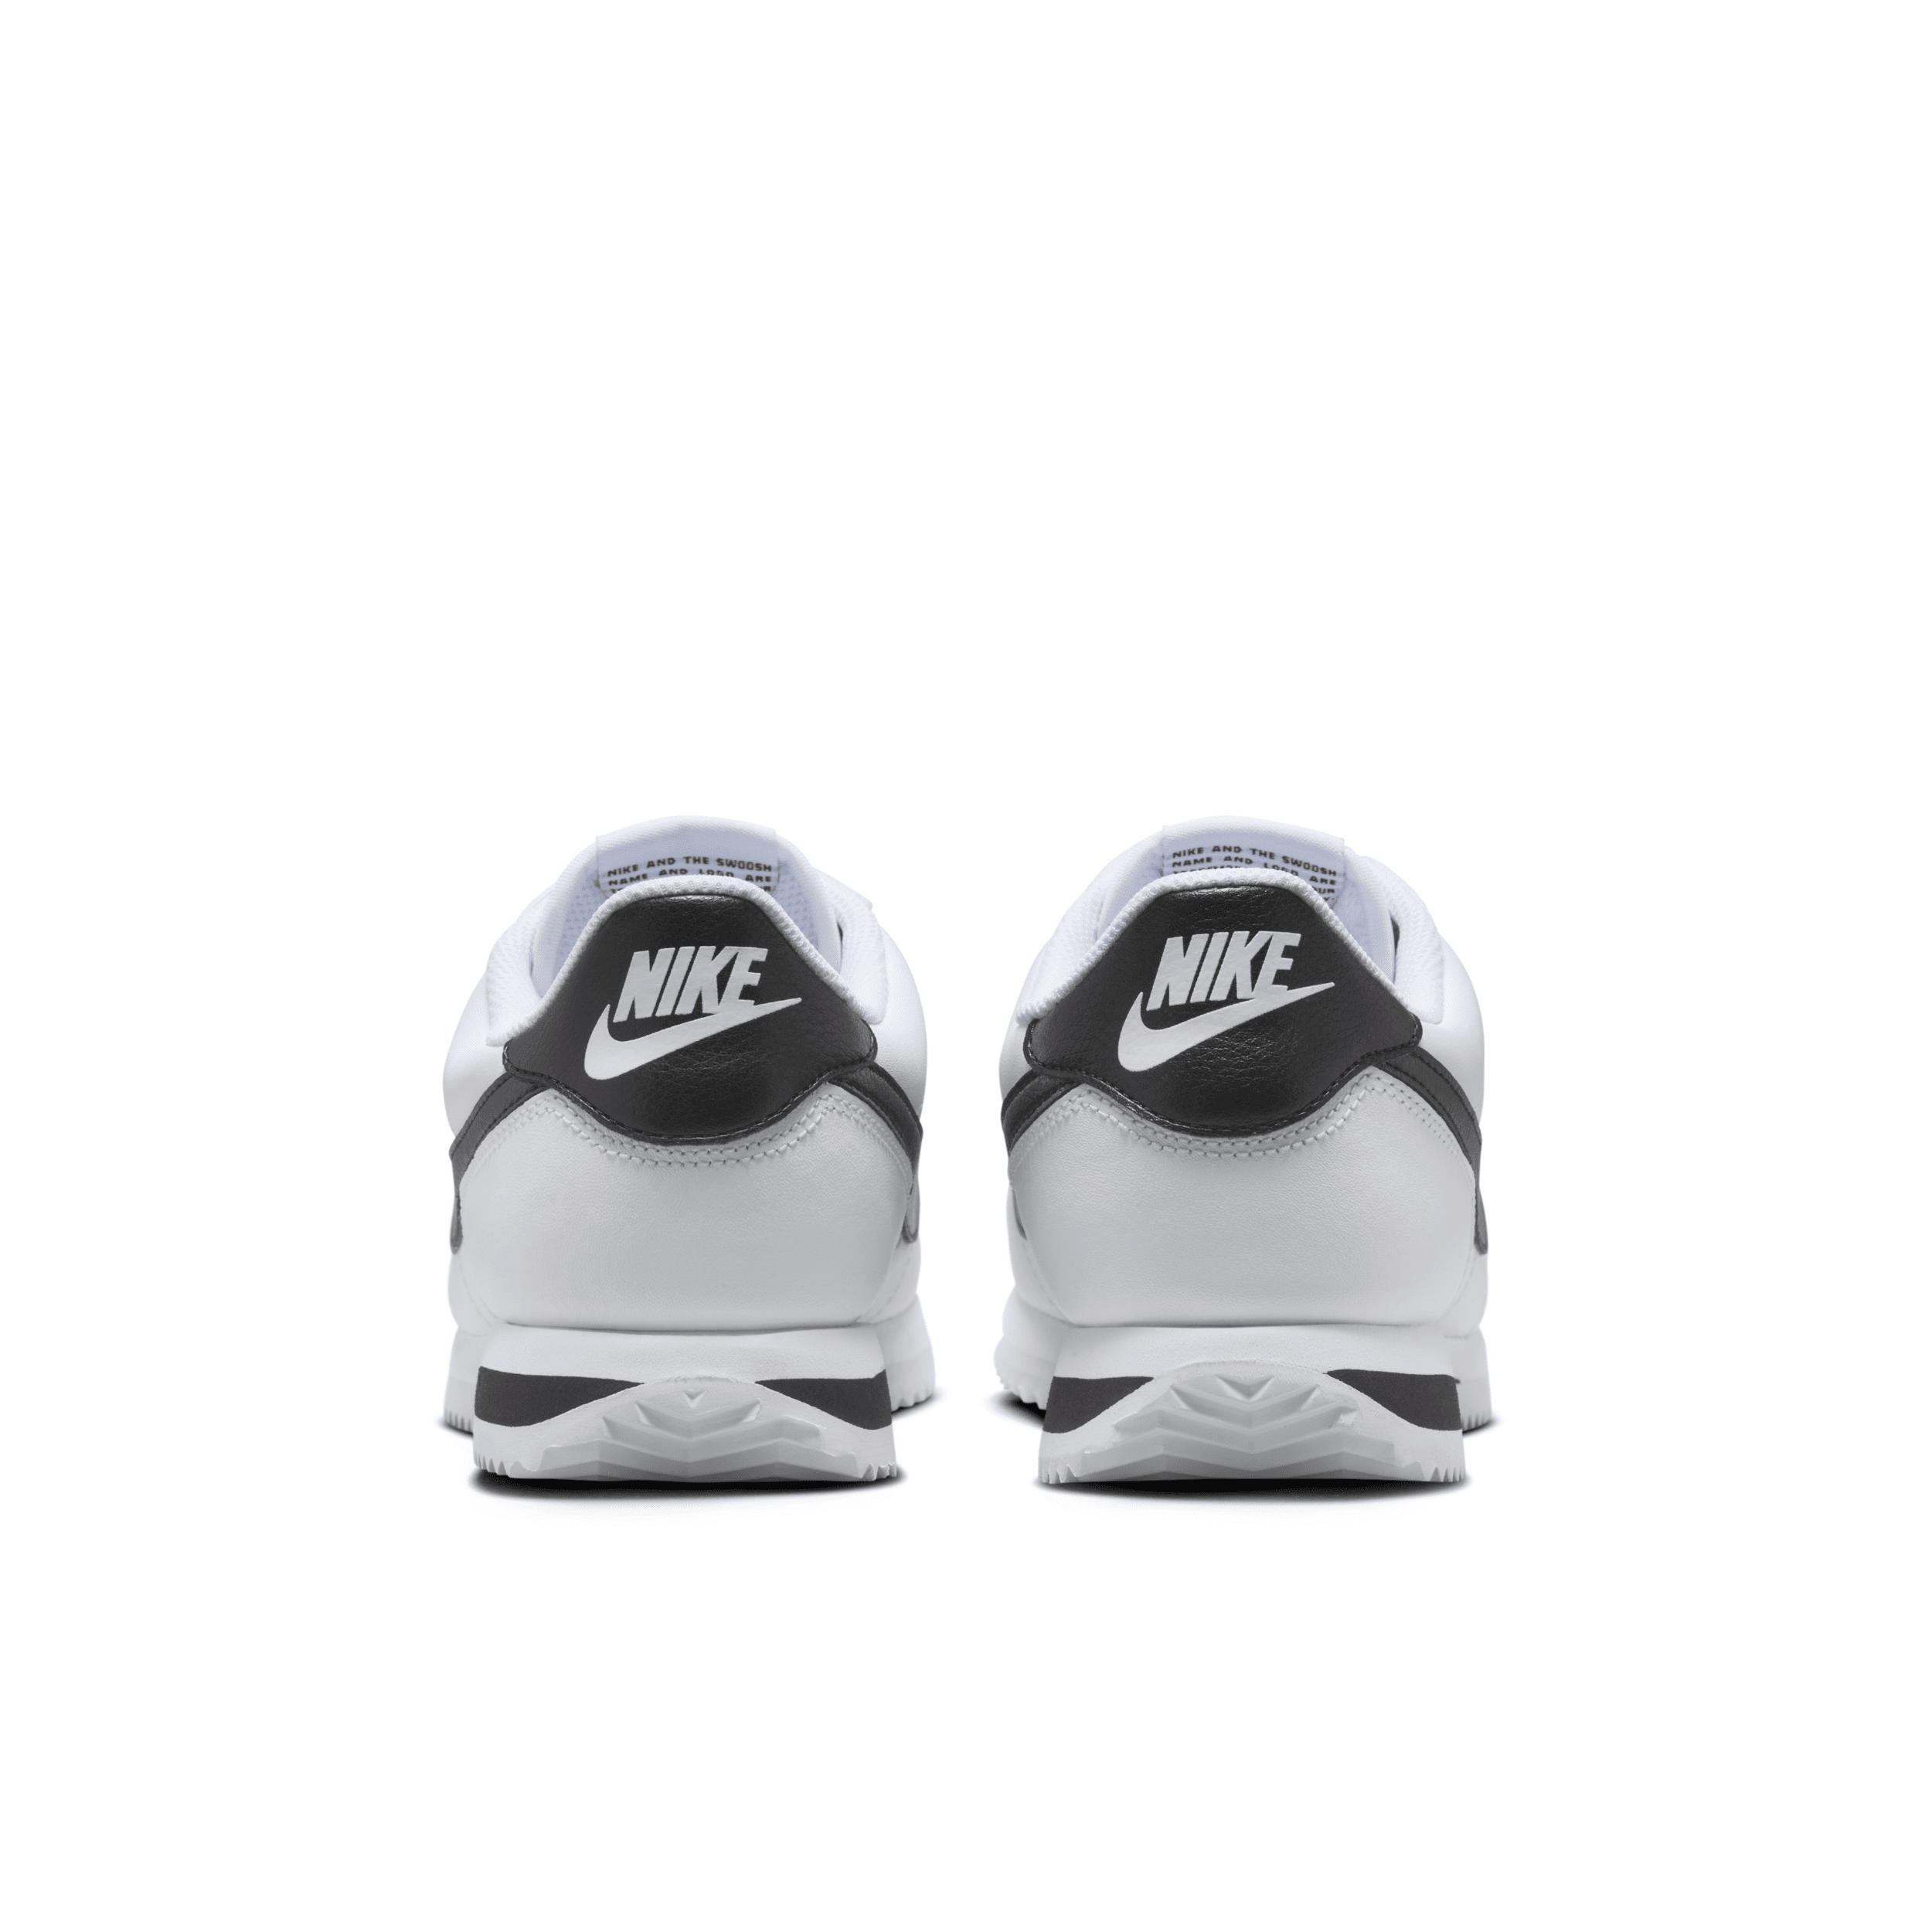 Nike Cortez Leather Shoes Product Image